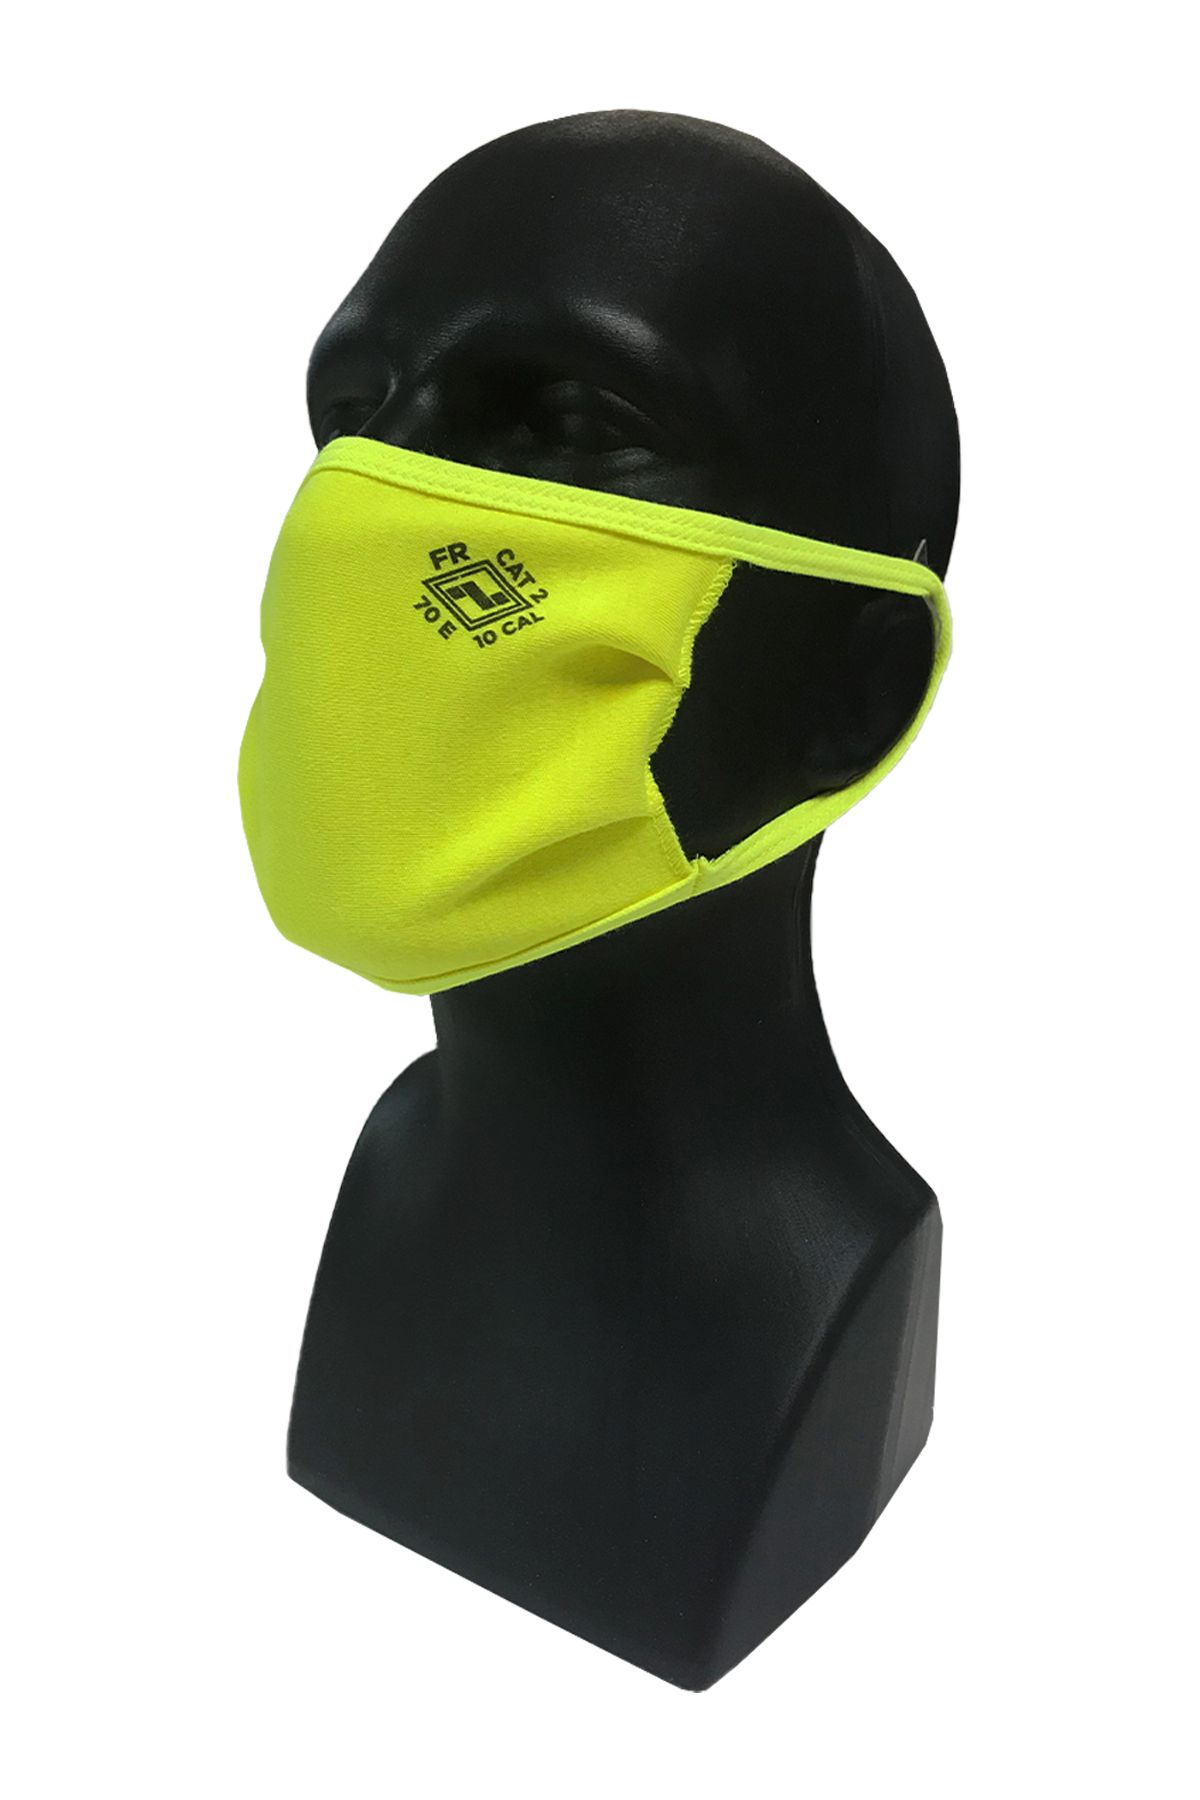 Double Layer Hi-Viz FR Face Mask